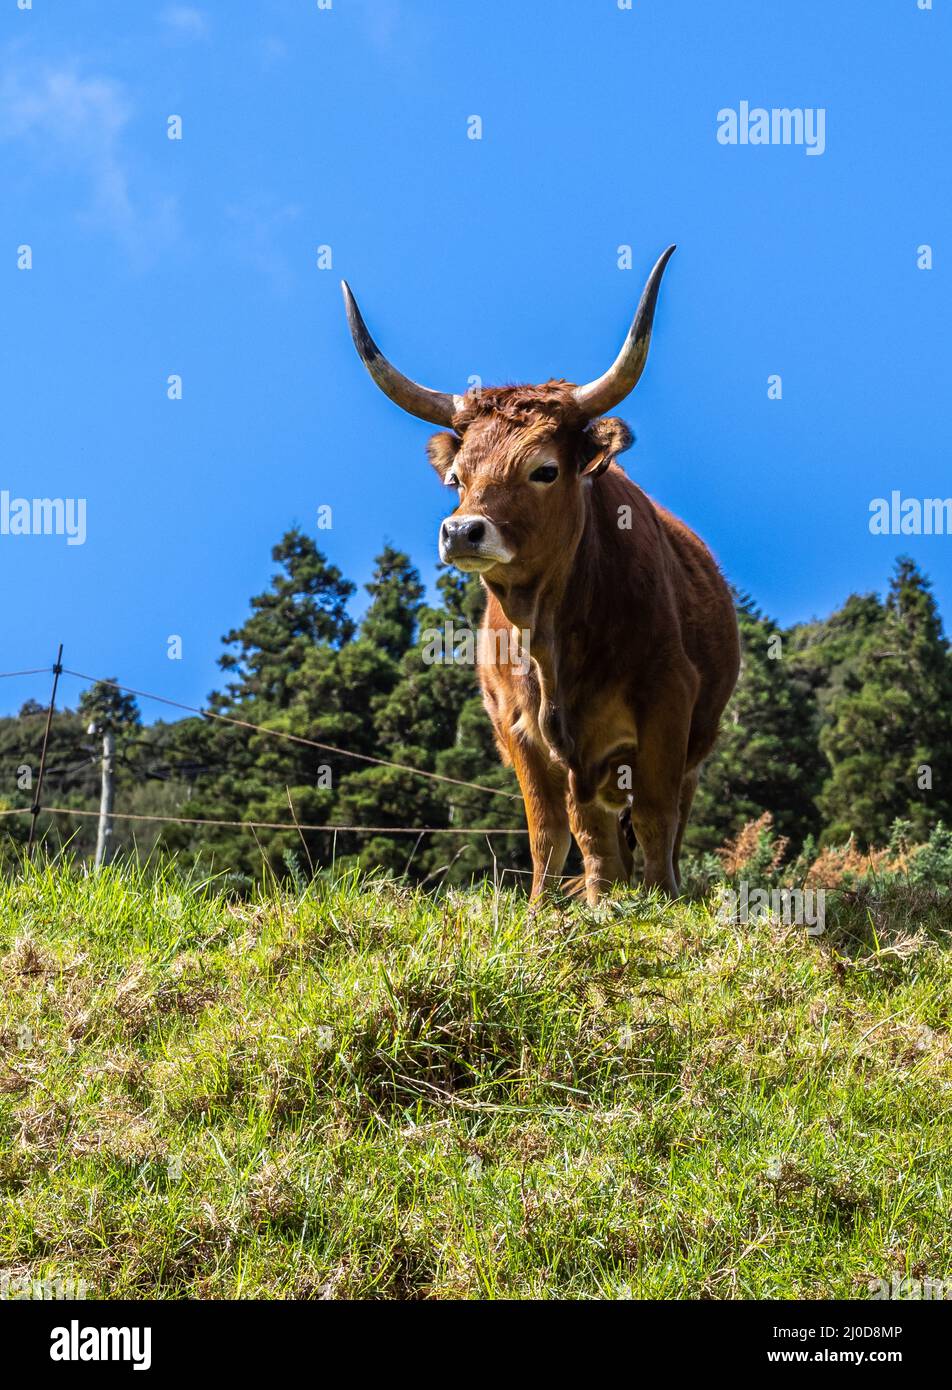 Fierce Bull protecting its territory, Madeira Stock Photo